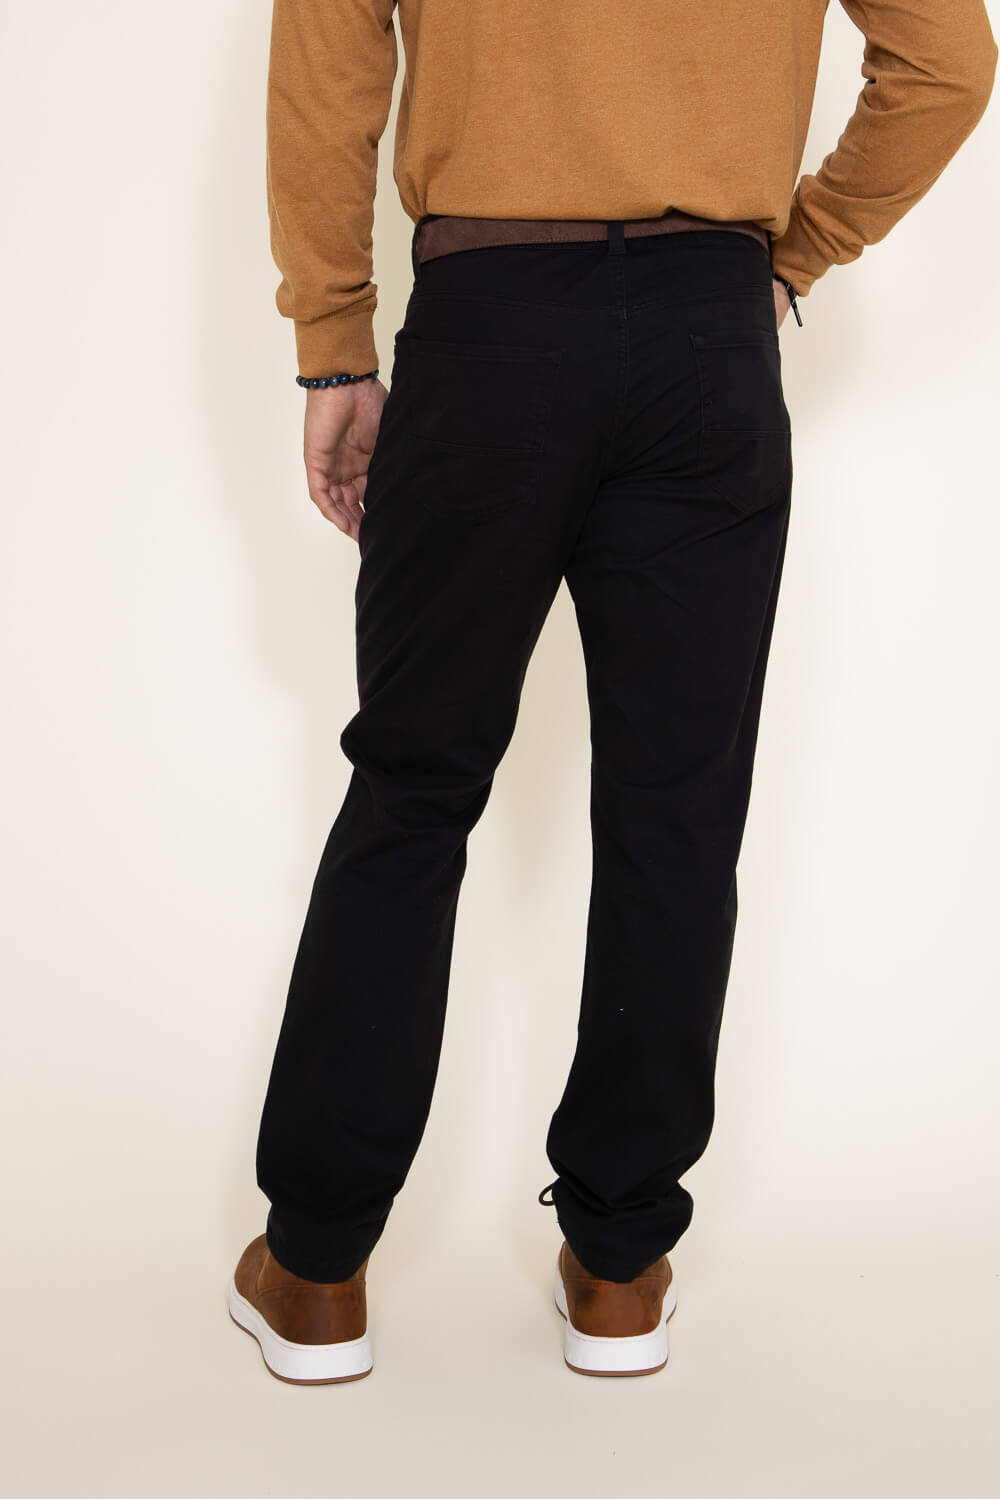 Weatherproof Vintage Stretch Twill Pants for Men in Black | W3F200-BLA ...